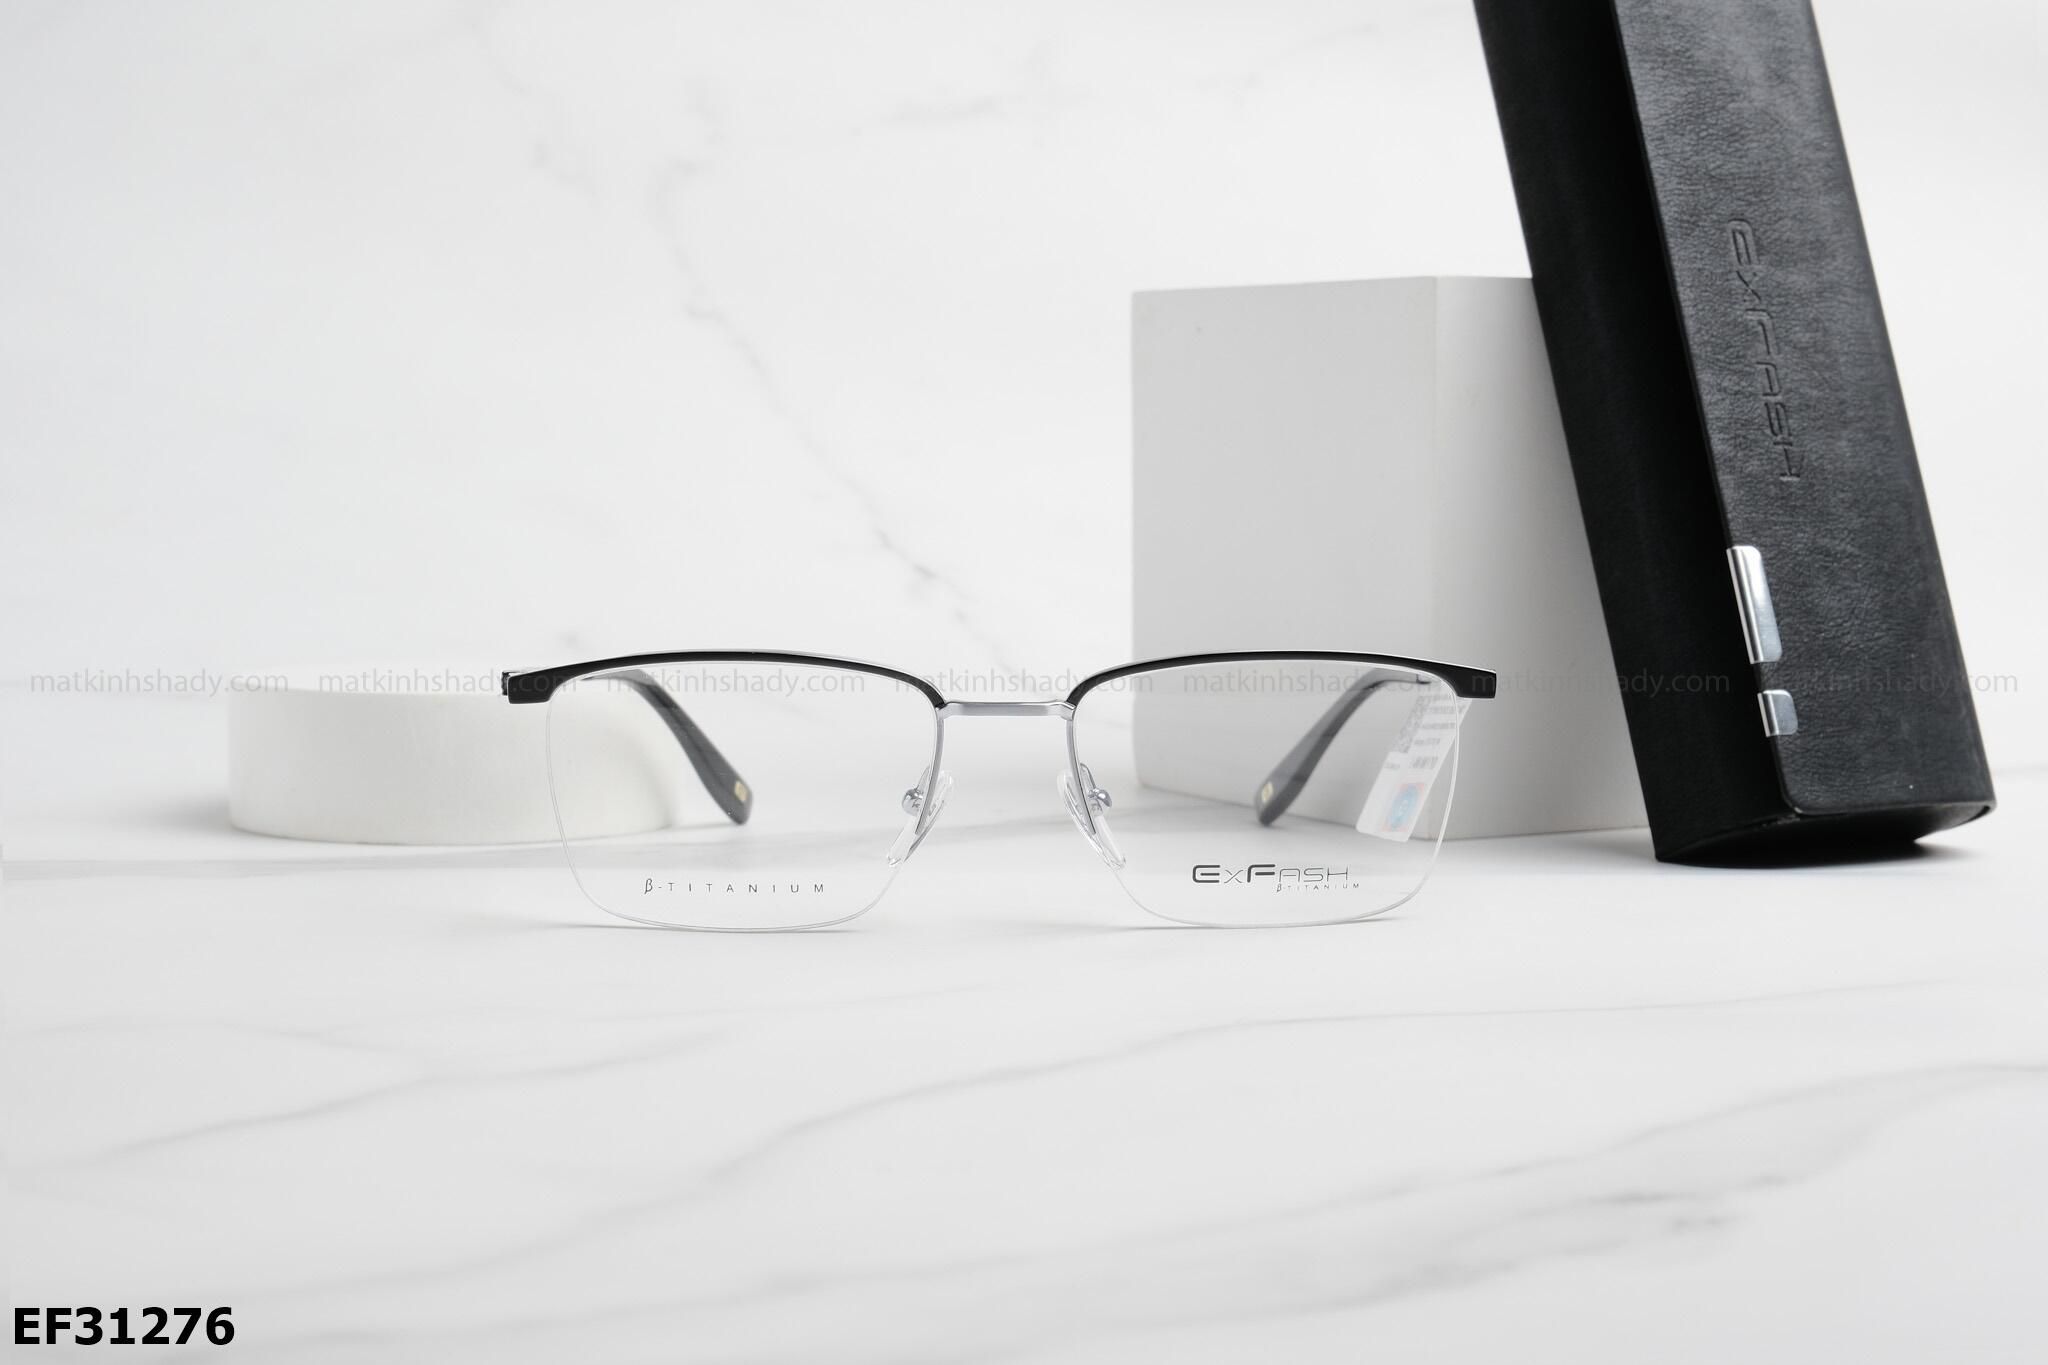  Exfash Eyewear - Glasses - EF31276 